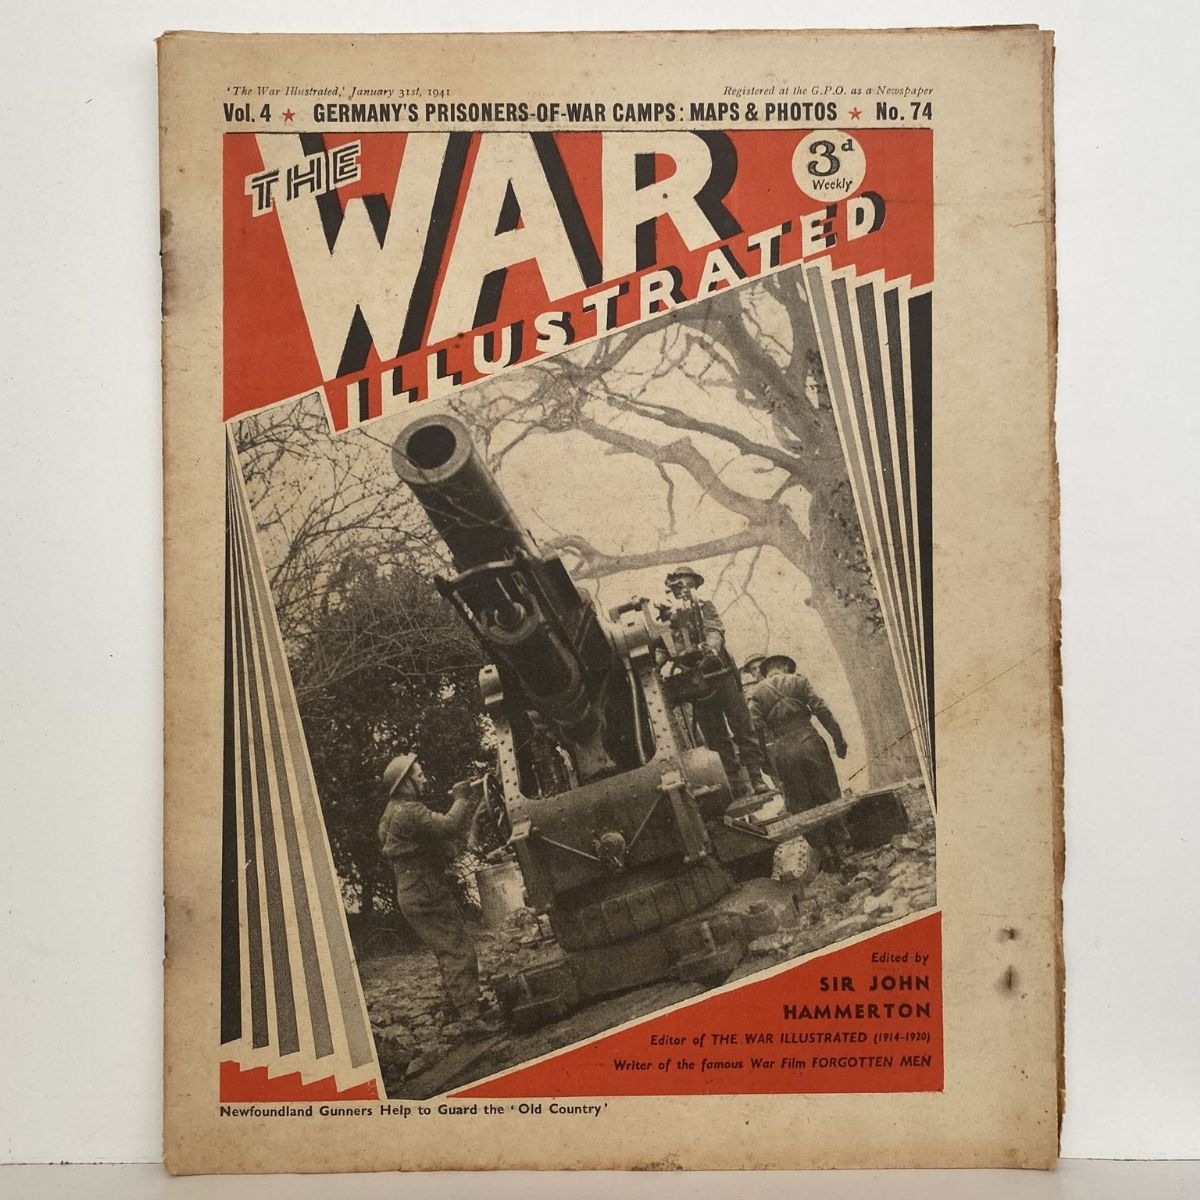 THE WAR ILLUSTRATED - Vol 4, No 74, 31st Jan 1941